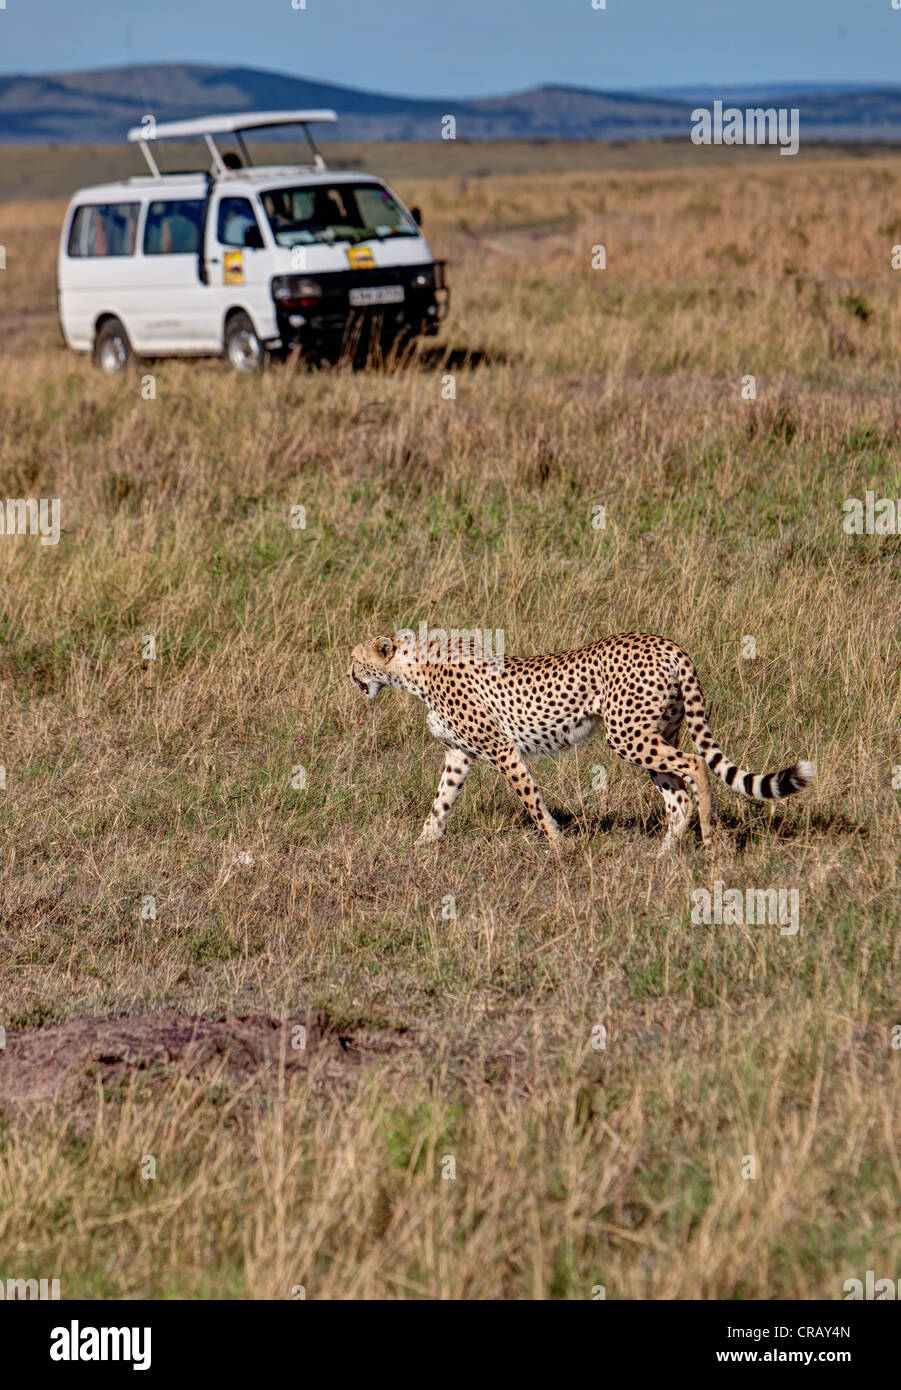 Cheetah (Acinonyx jubatus) crossing in front of a safari bus, Masai Mara National Reserve, Kenya, East Africa, Africa Stock Photo